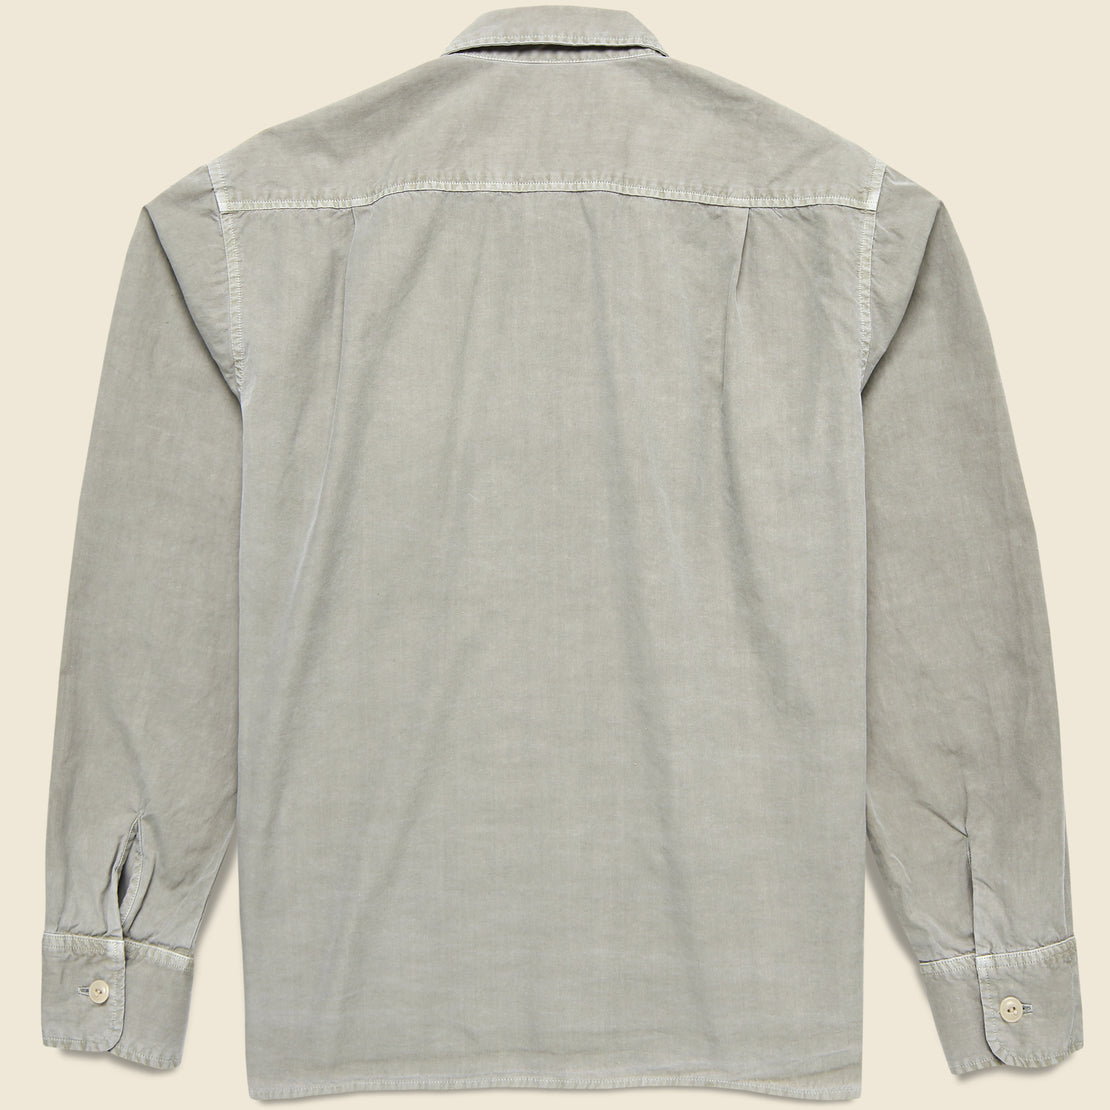 Camp Shirt Jacket - Khaki - Save Khaki - STAG Provisions - Outerwear - Shirt Jacket